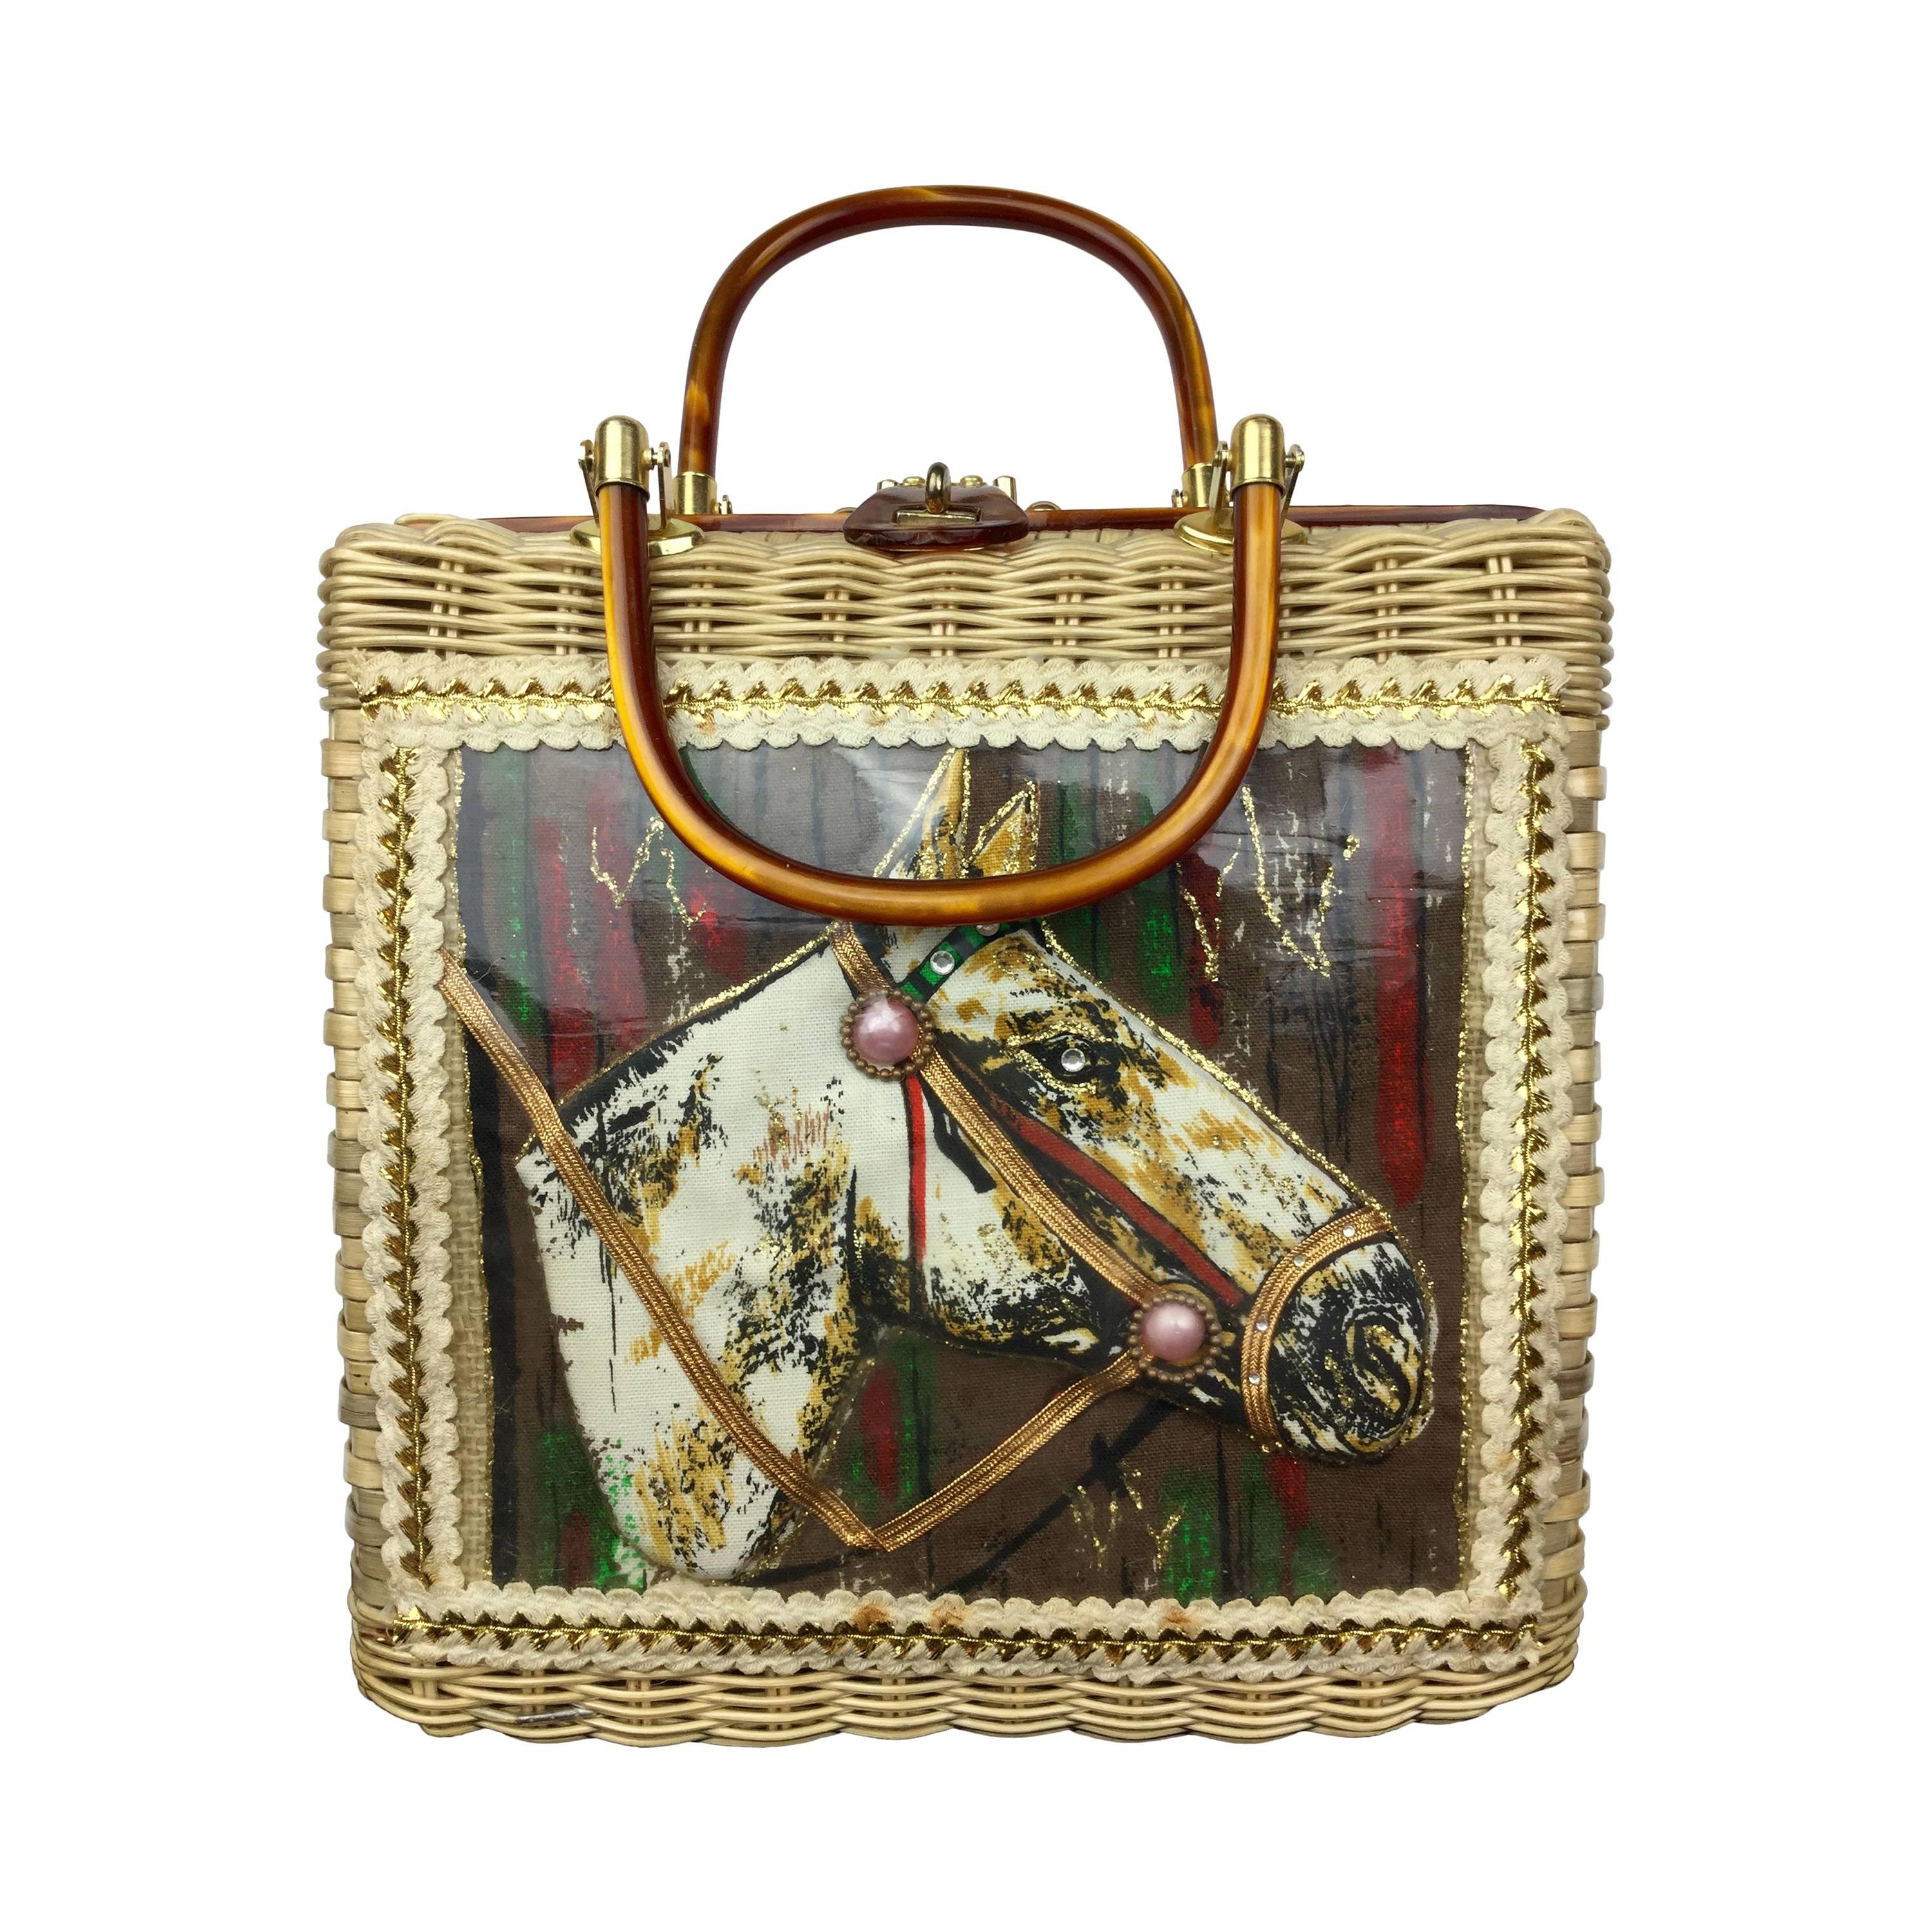 Charming Wicker Handbag with Fabric Horse Portrait. 1950's.